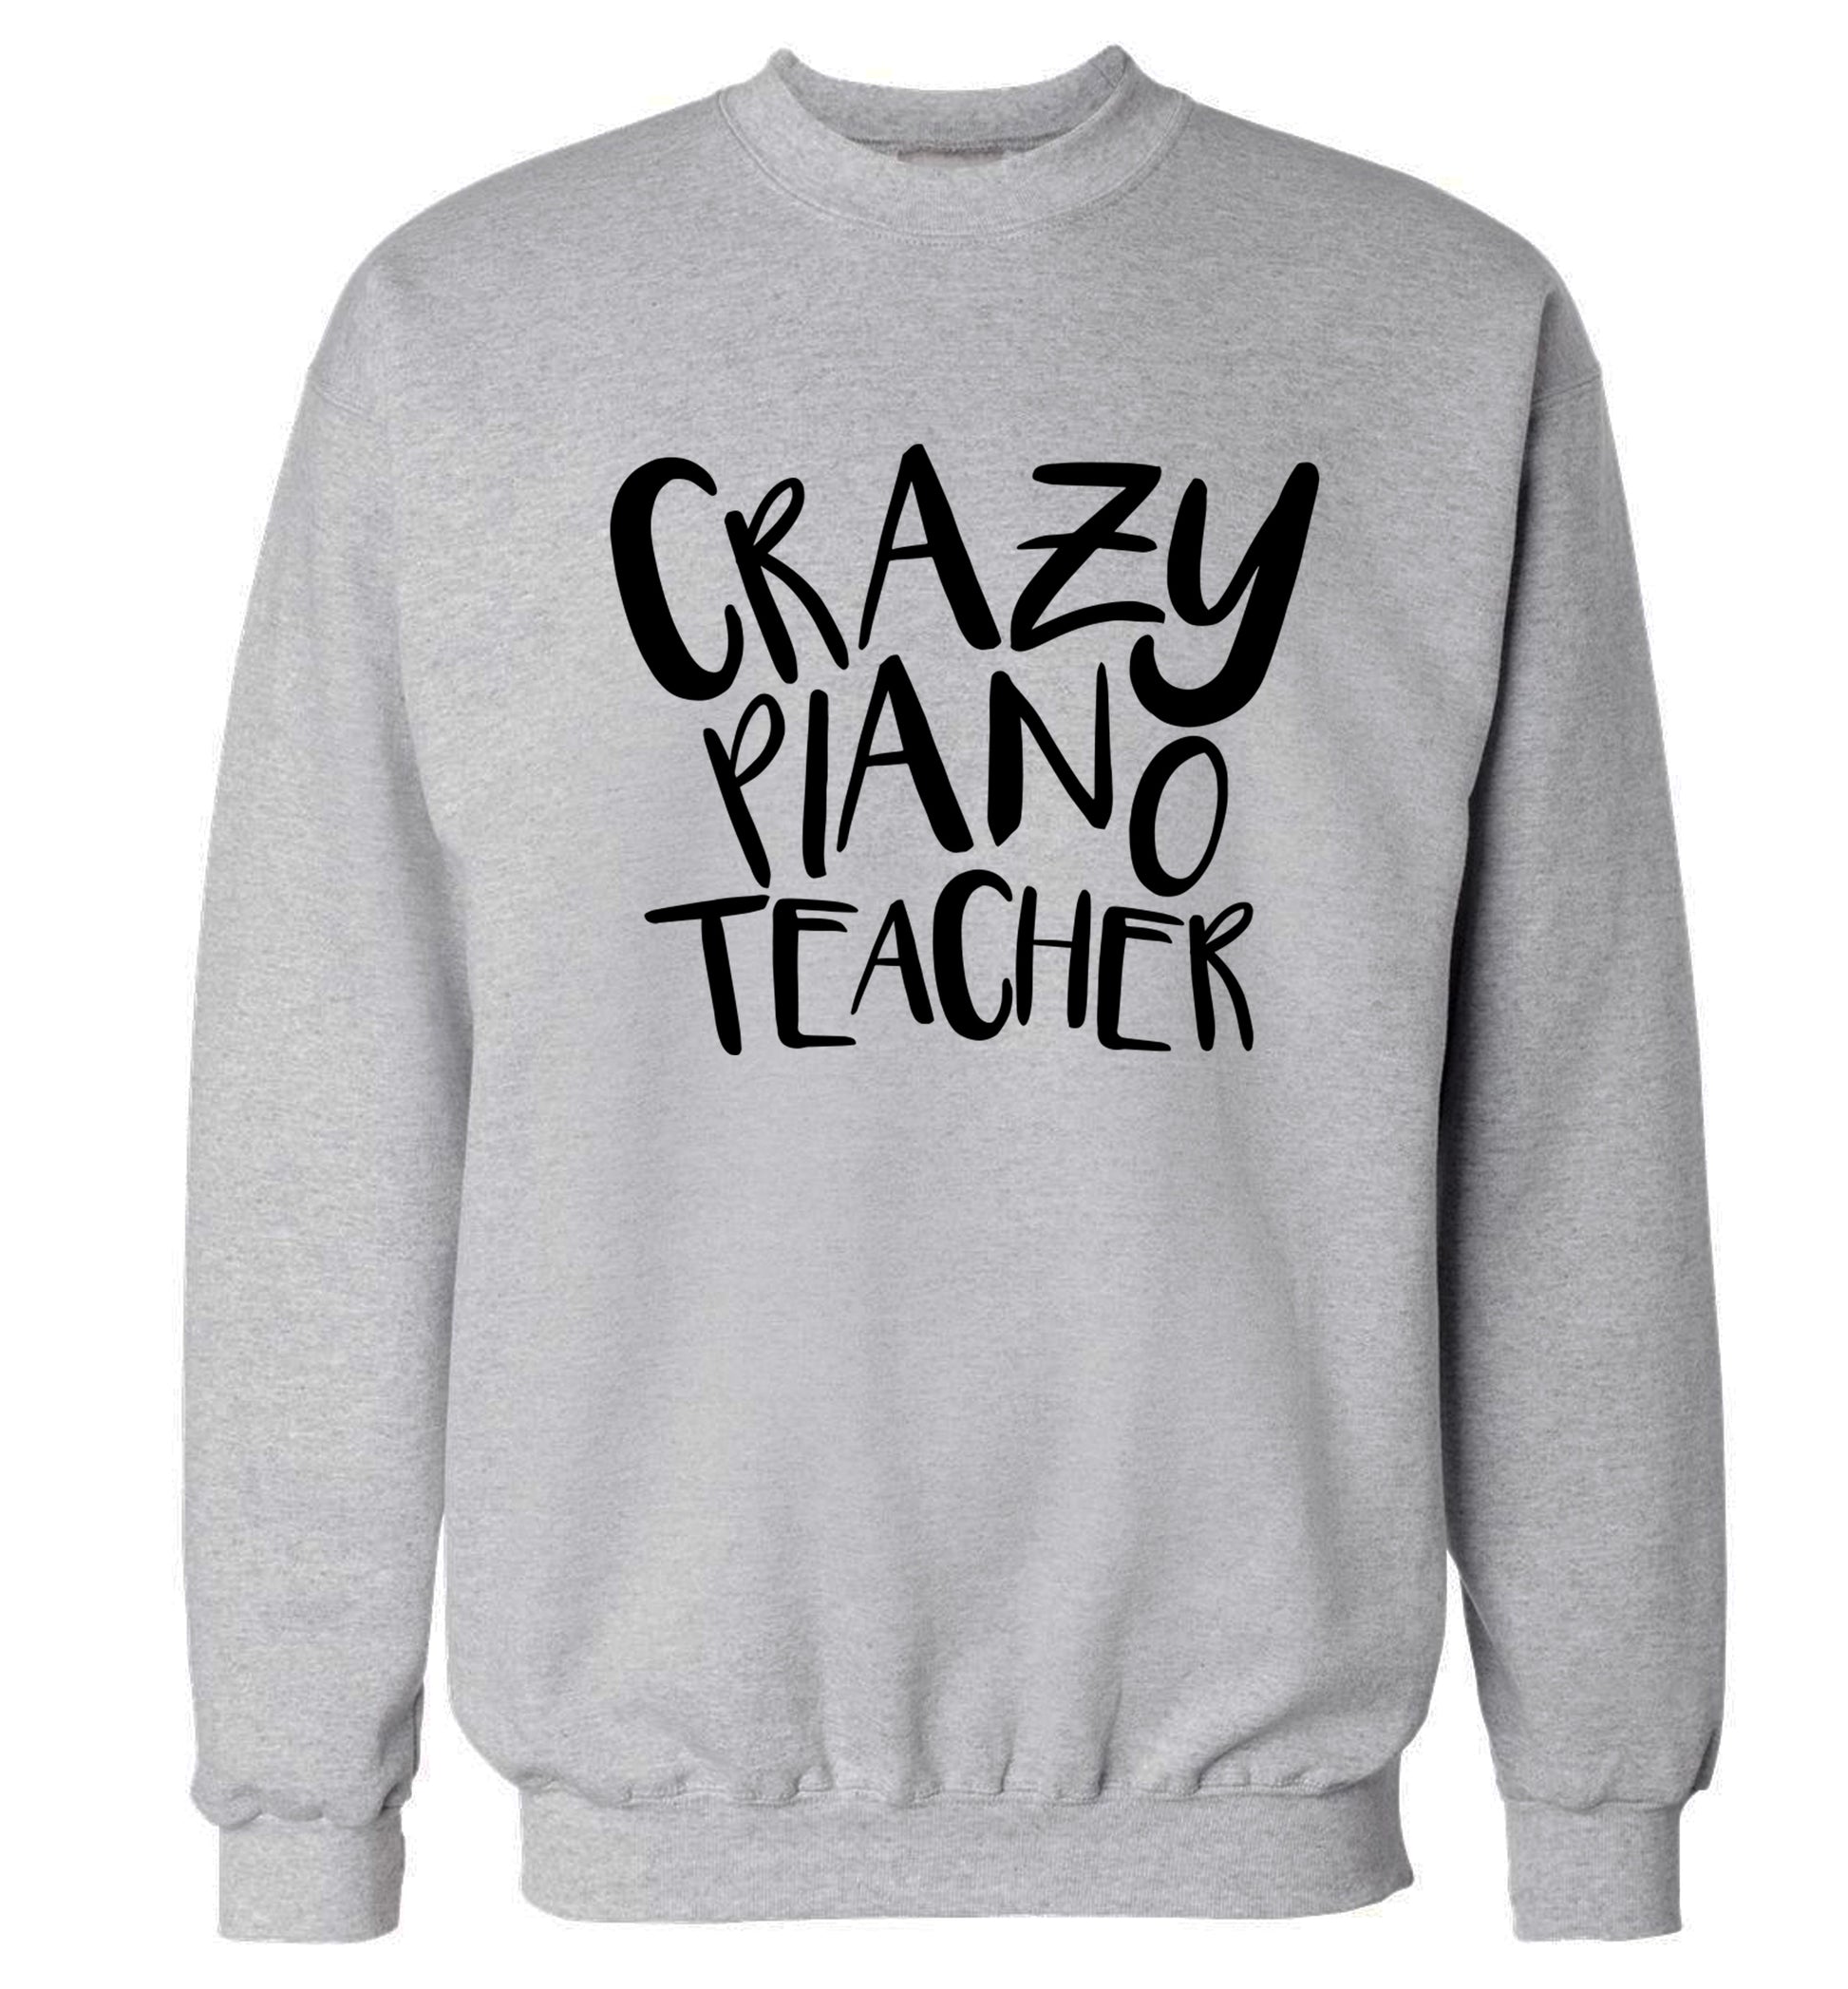 Crazy piano teacher Adult's unisex grey Sweater 2XL